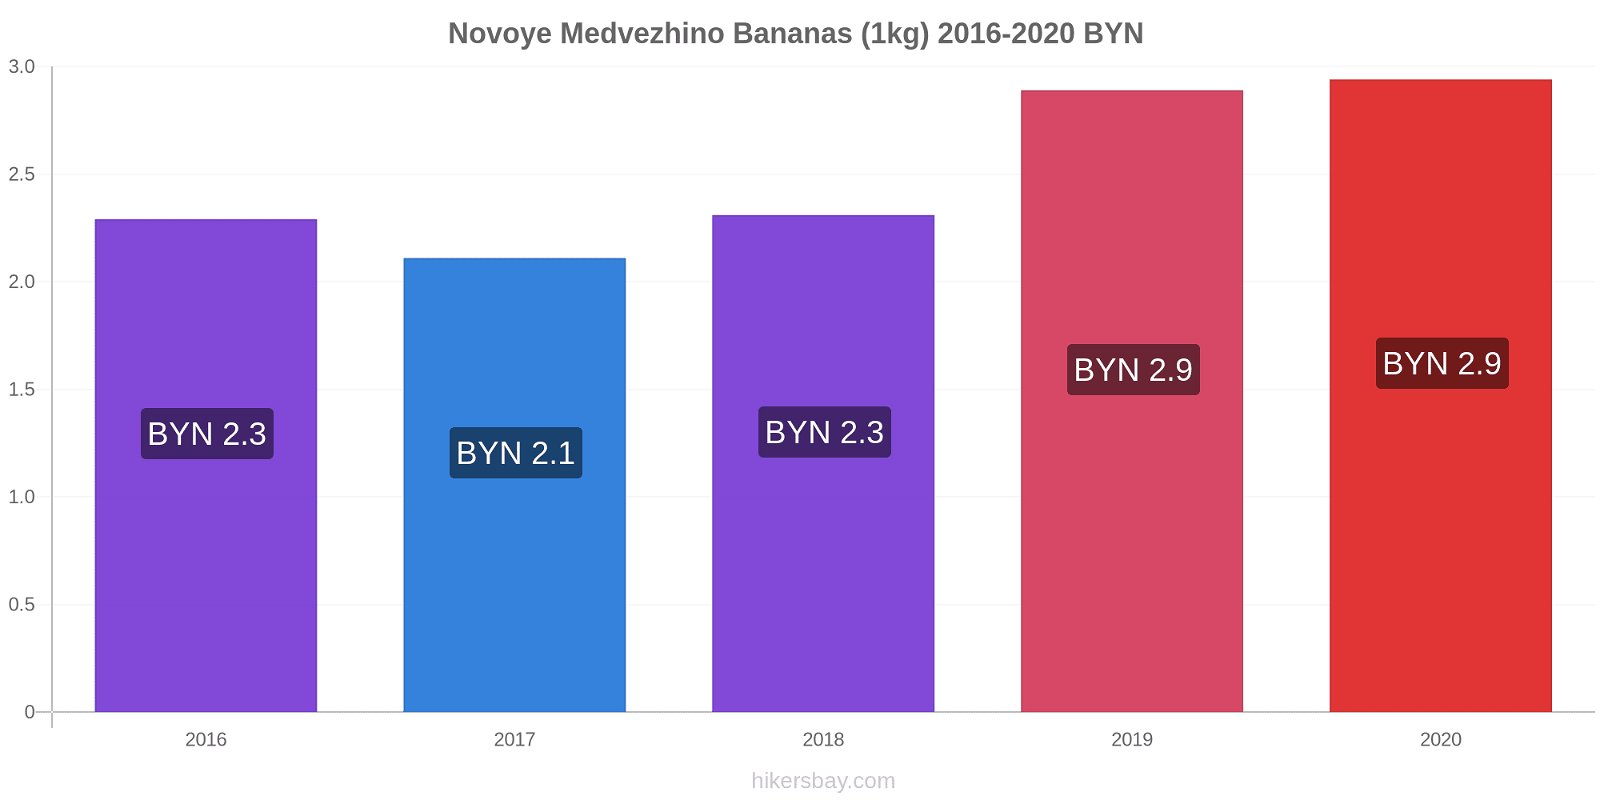 Novoye Medvezhino price changes Bananas (1kg) hikersbay.com